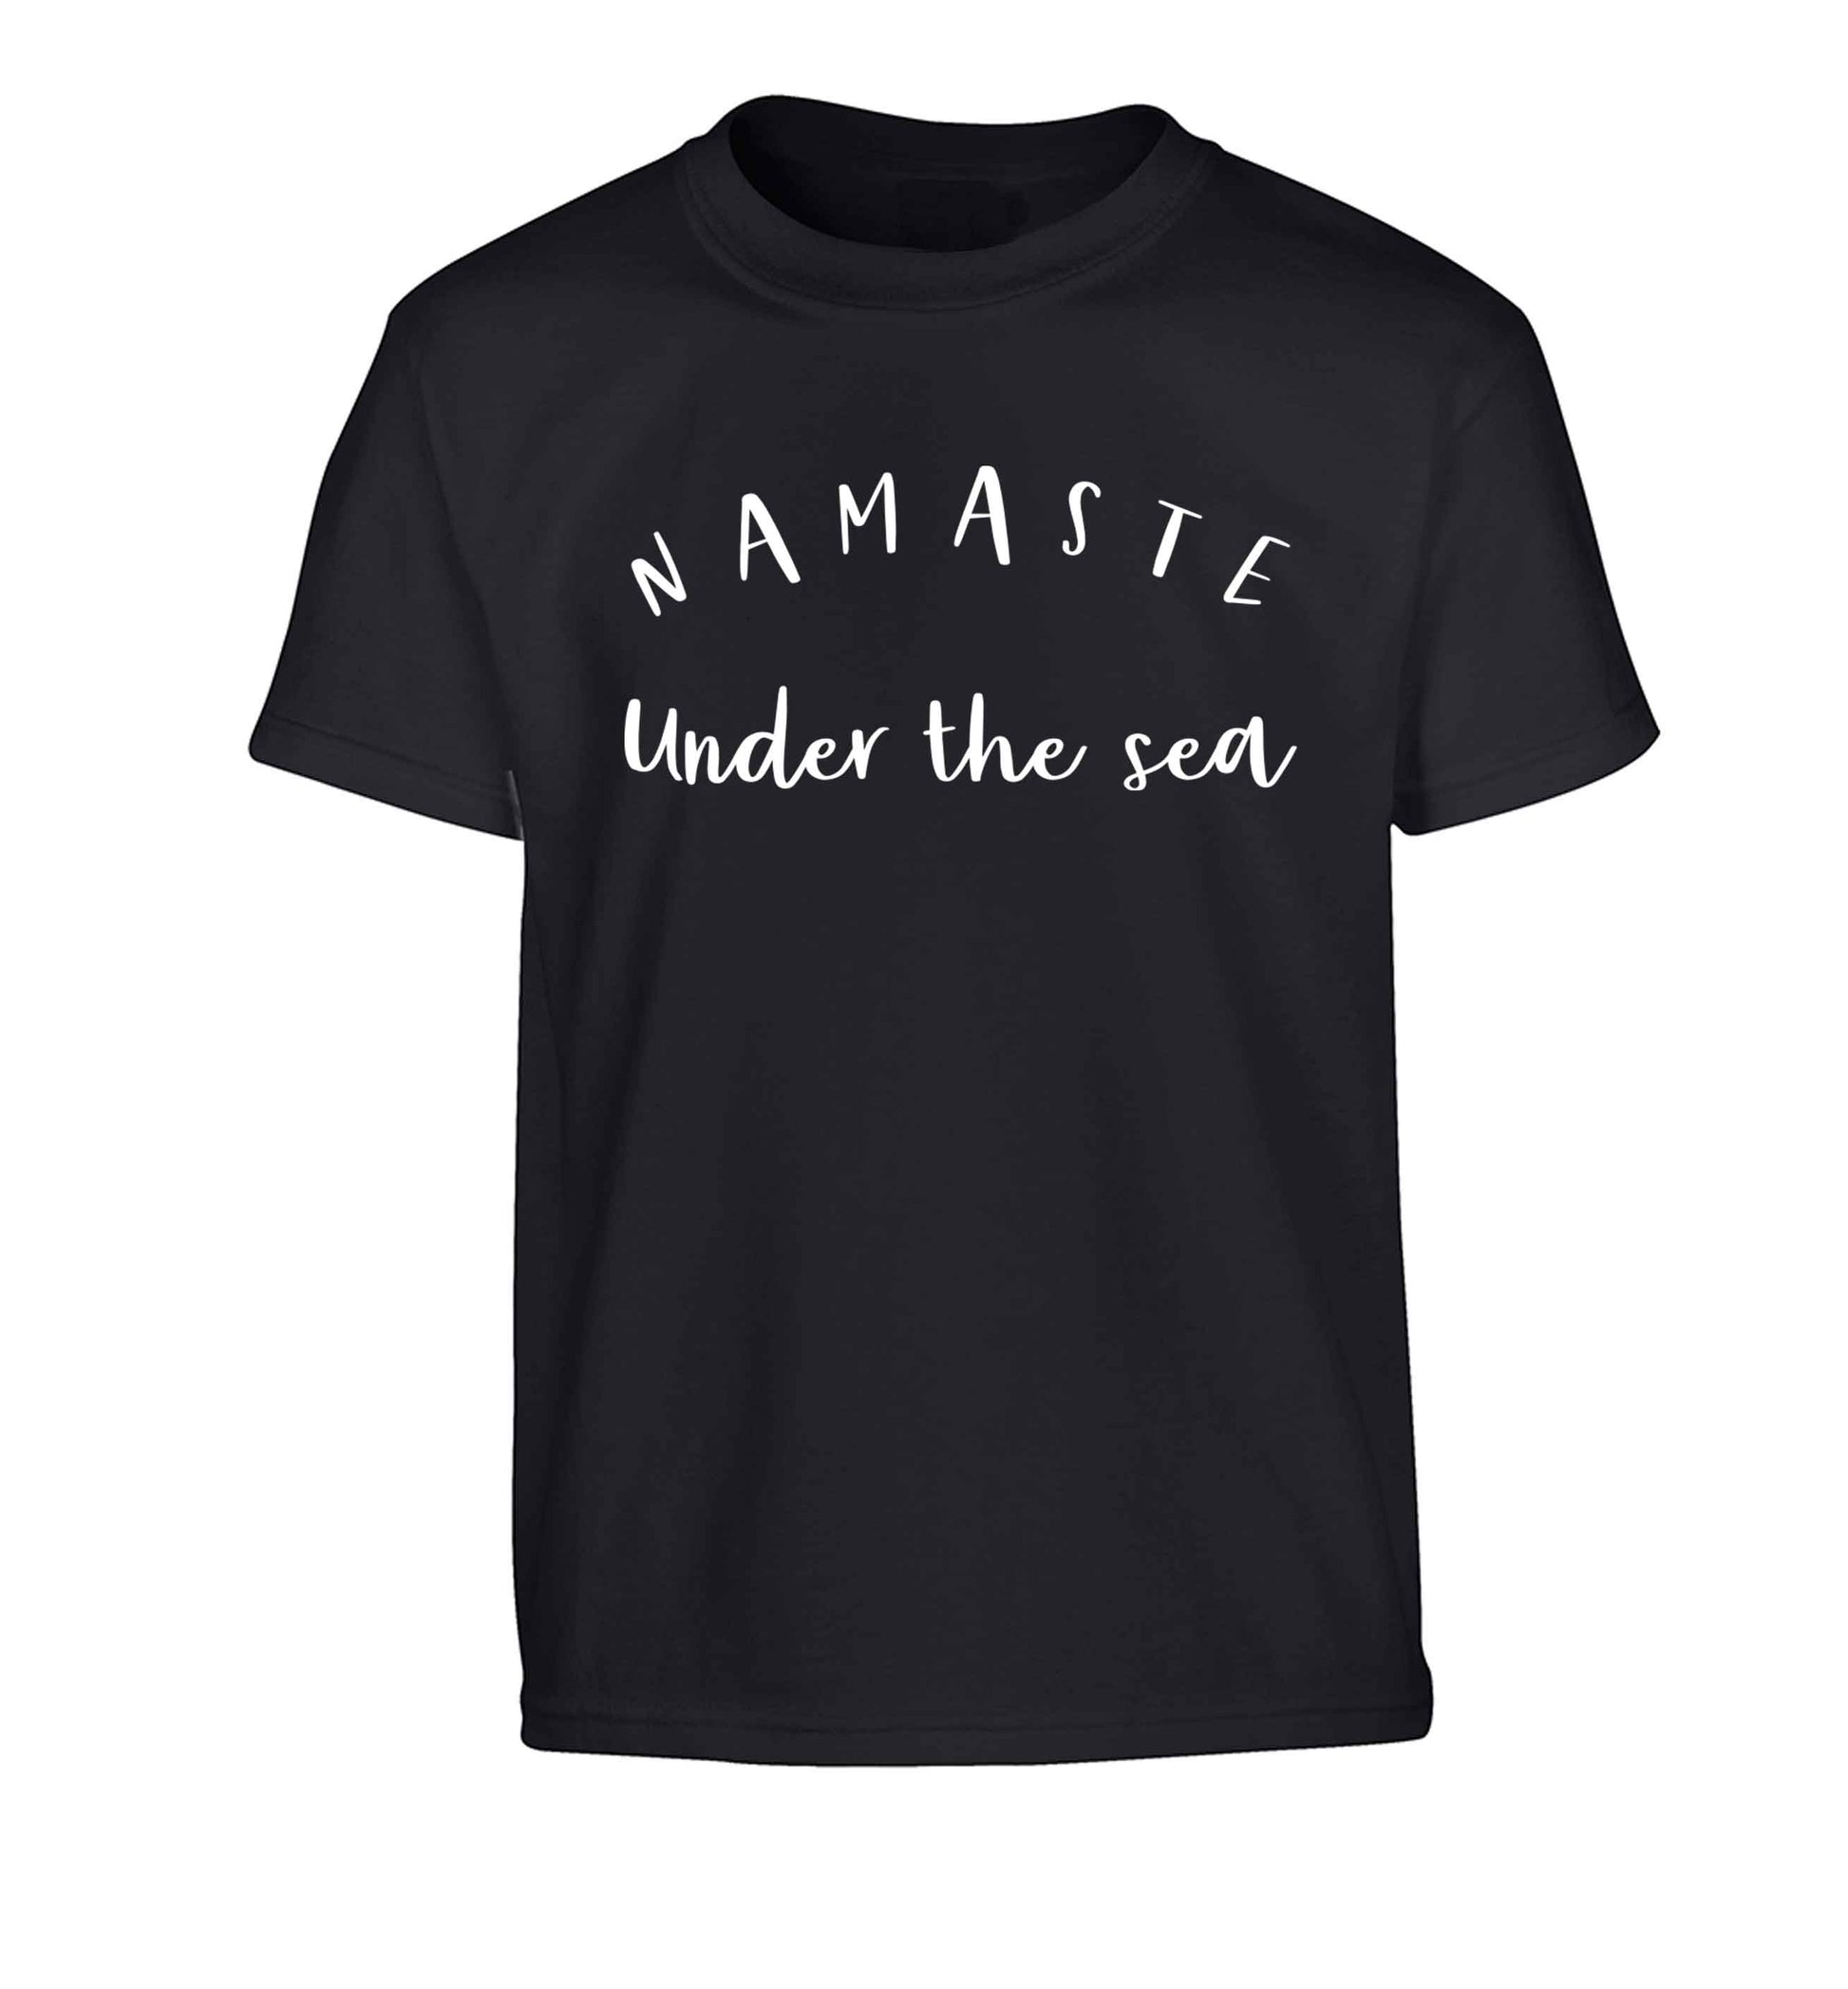 Namaste under the water Children's black Tshirt 12-13 Years